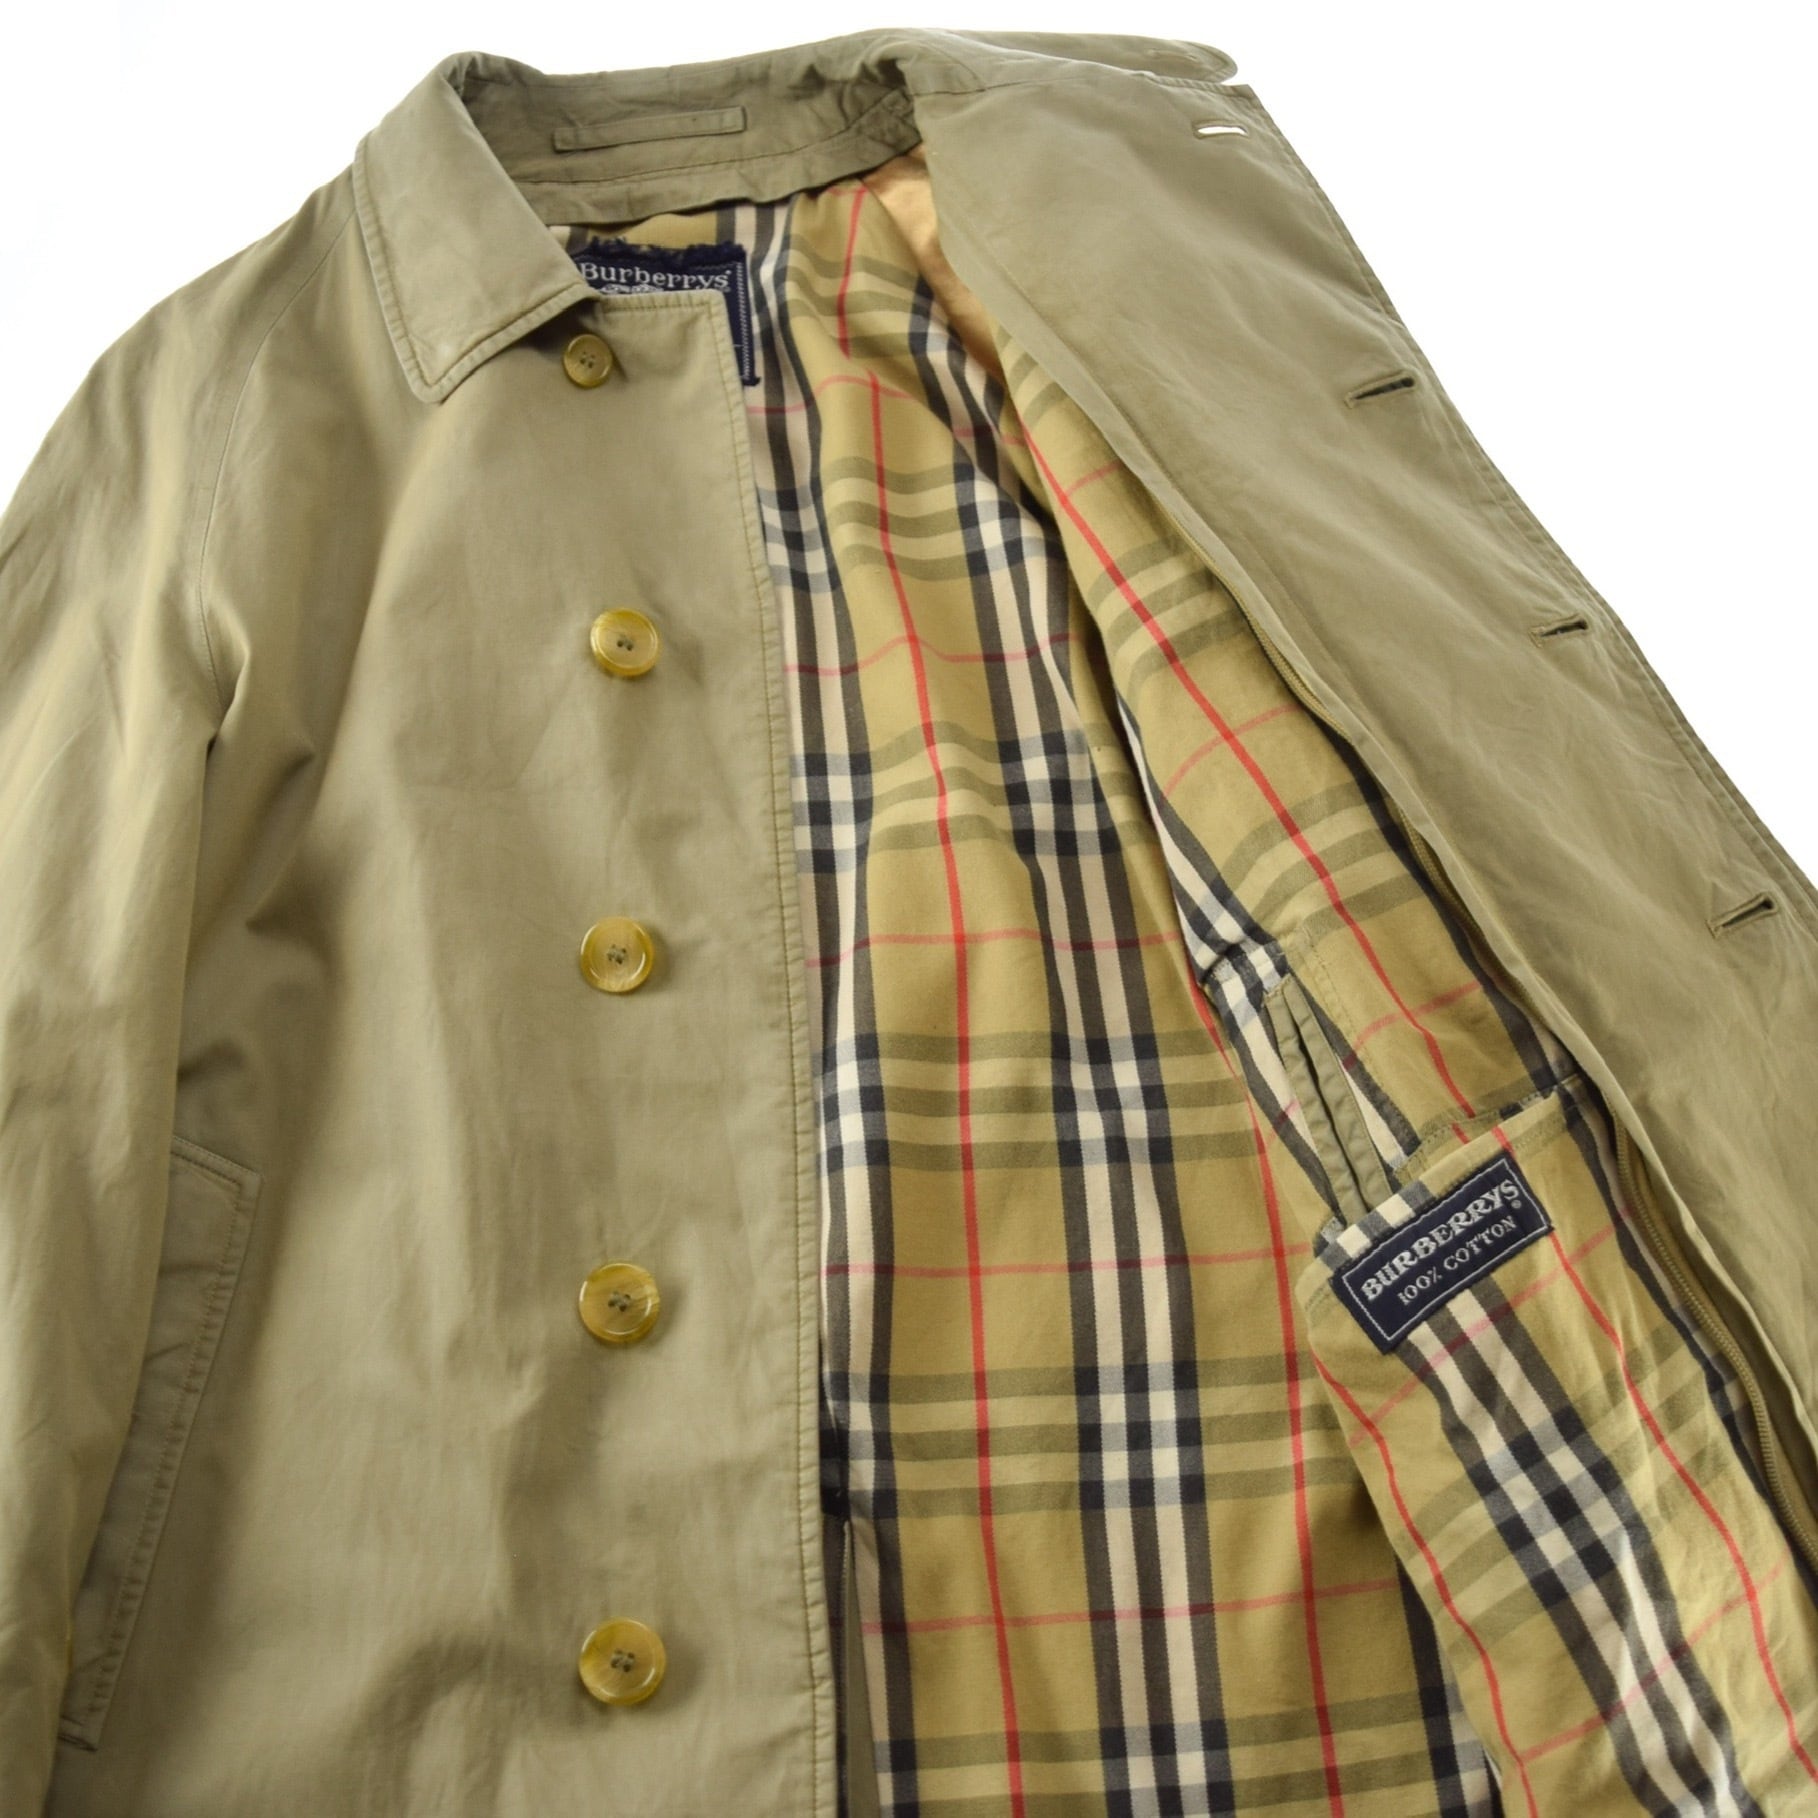 1980's "Burberrys" Vintage Bal Collar Coat Made In ENGLAND "MARUZEN" 80蟷ｴ莉｣  繝舌�ｼ繝舌Μ繝ｼ 繝ｴ繧｣繝ｳ繝�繝ｼ繧ｸ 繧ｹ繝�繝ｳ繧ｫ繝ｩ繝ｼ繧ｳ繝ｼ繝� 繝弱ヰ繝√ぉ繝�繧ｯ 闍ｱ蝗ｽ陬ｽ 繝吶�ｼ繧ｸ繝･ 荳ｸ蝟�蛻･豕ｨ 繝薙Φ繝�繝ｼ繧ｸ 80s marron vintage